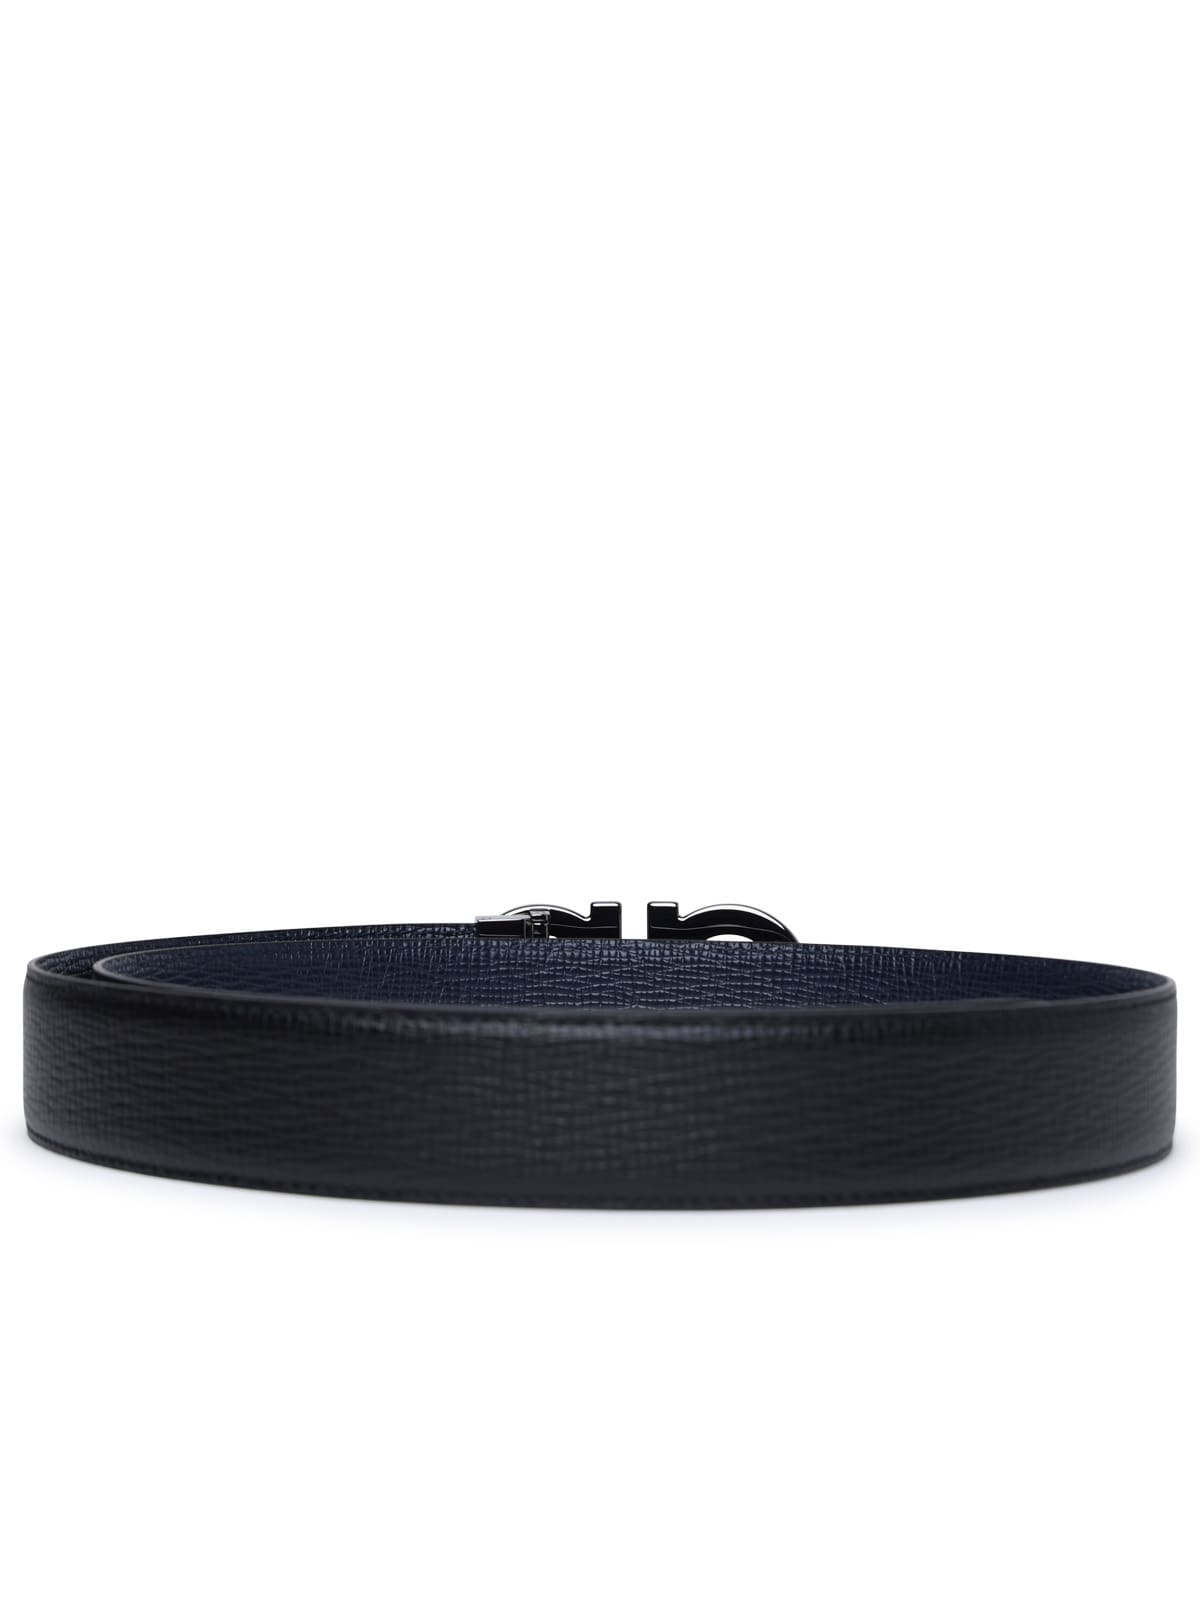 Shop Ferragamo Gancini Black And Blue Calf Leather Reversible Belt